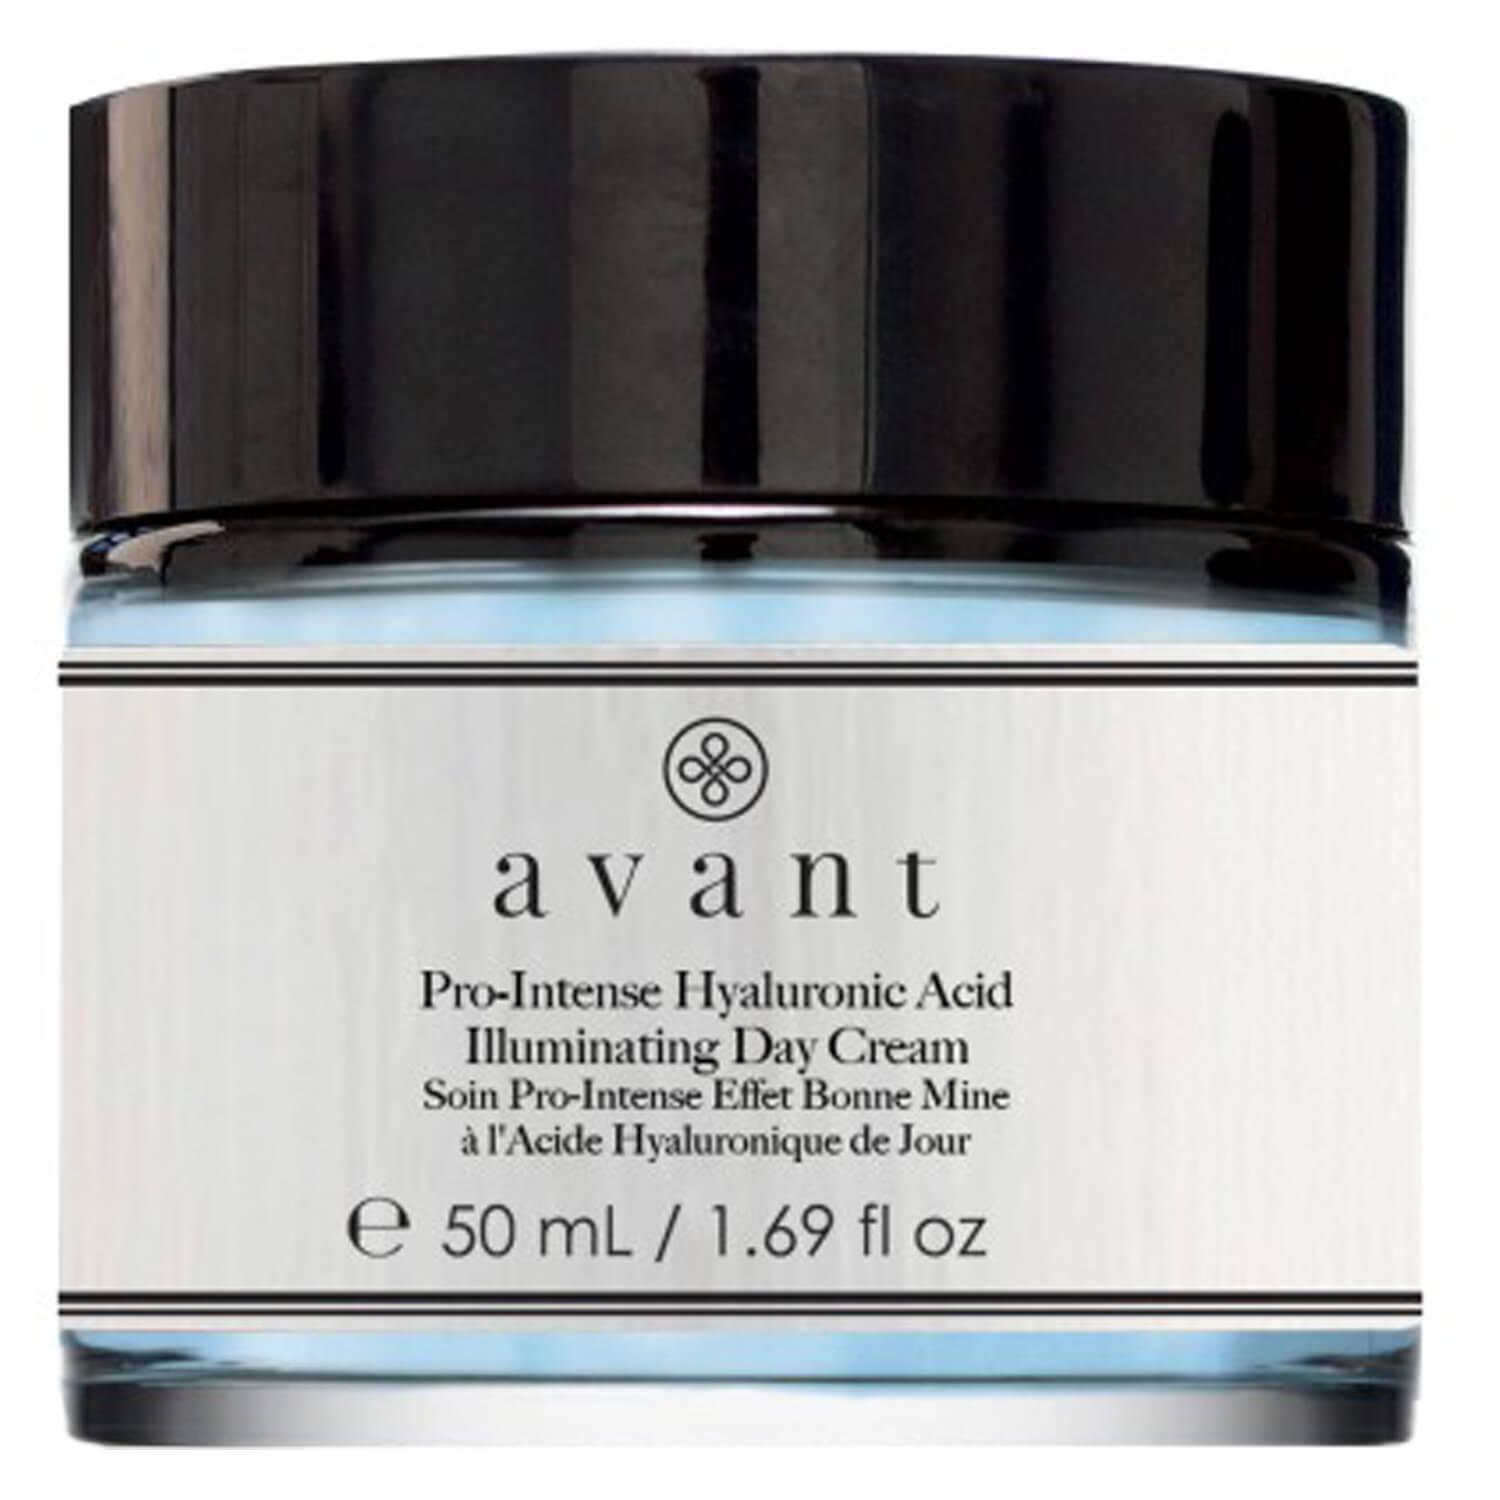 avant - Pro-Intense Hyaluronic Acid Illuminating Day Cream